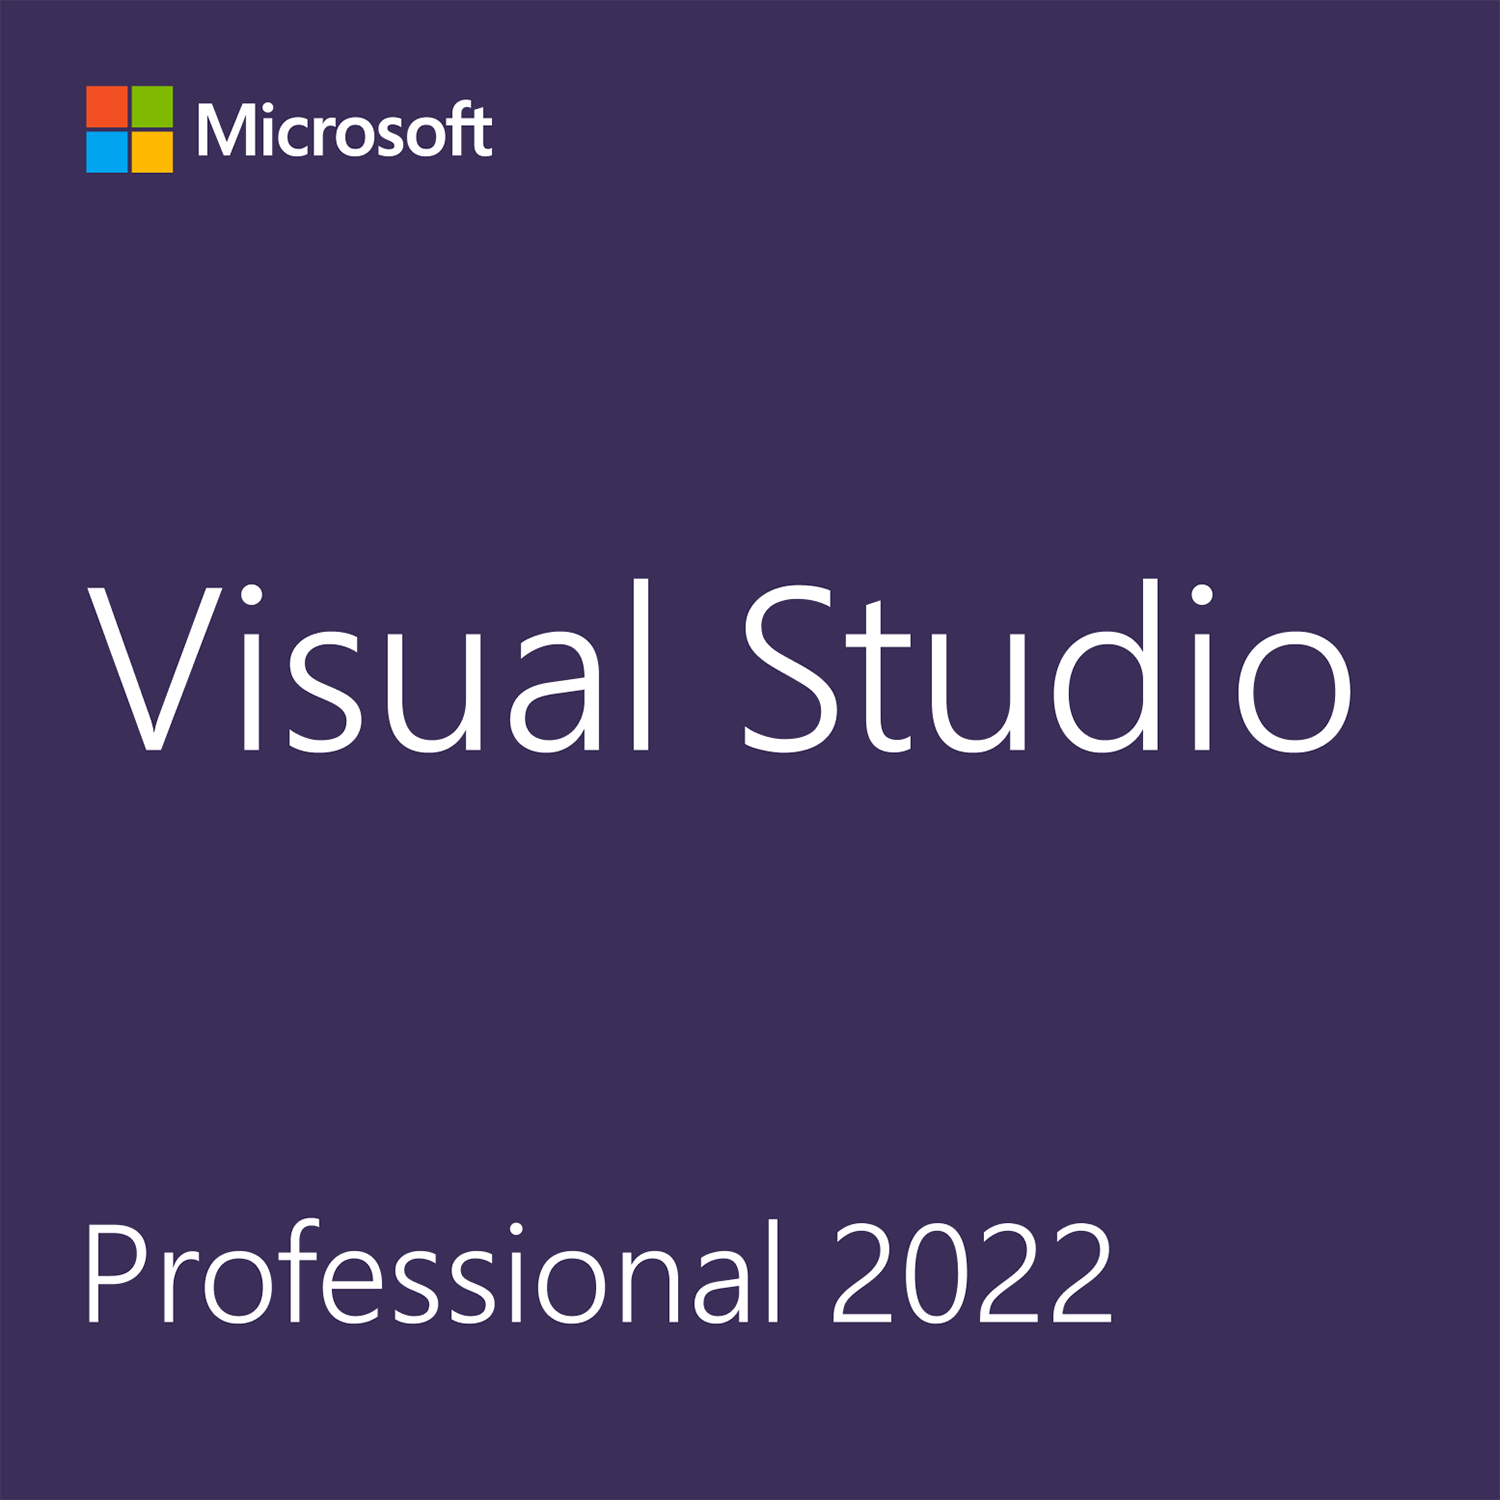 Visual Studio Professional 2022 là gì?